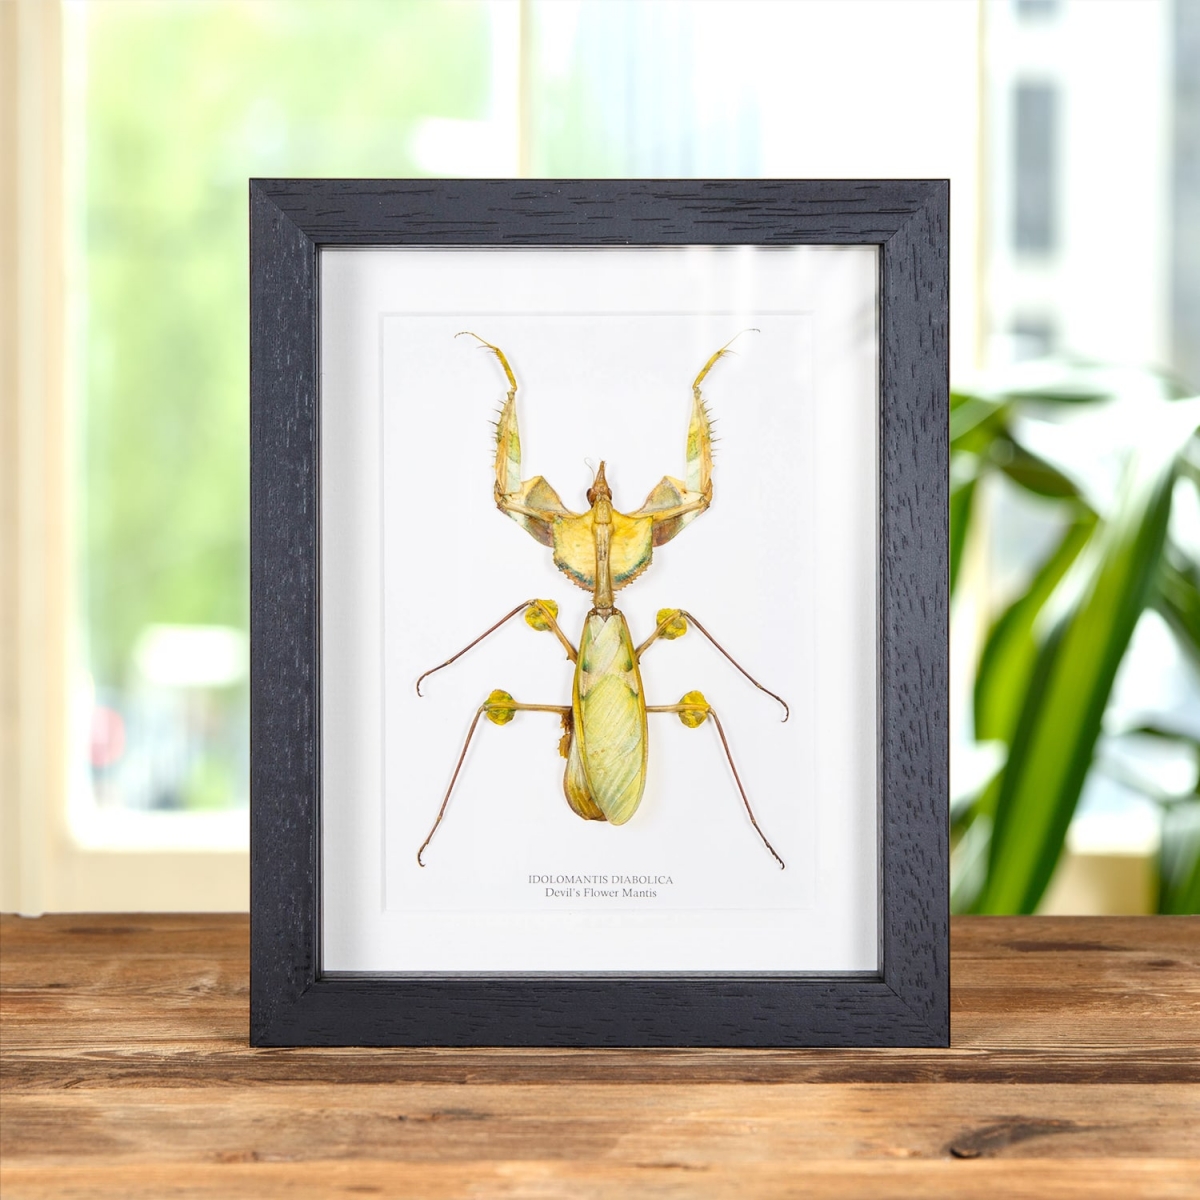 Minibeast Devil's Flower Mantis in Box Frame (Idolomantis diabolica)